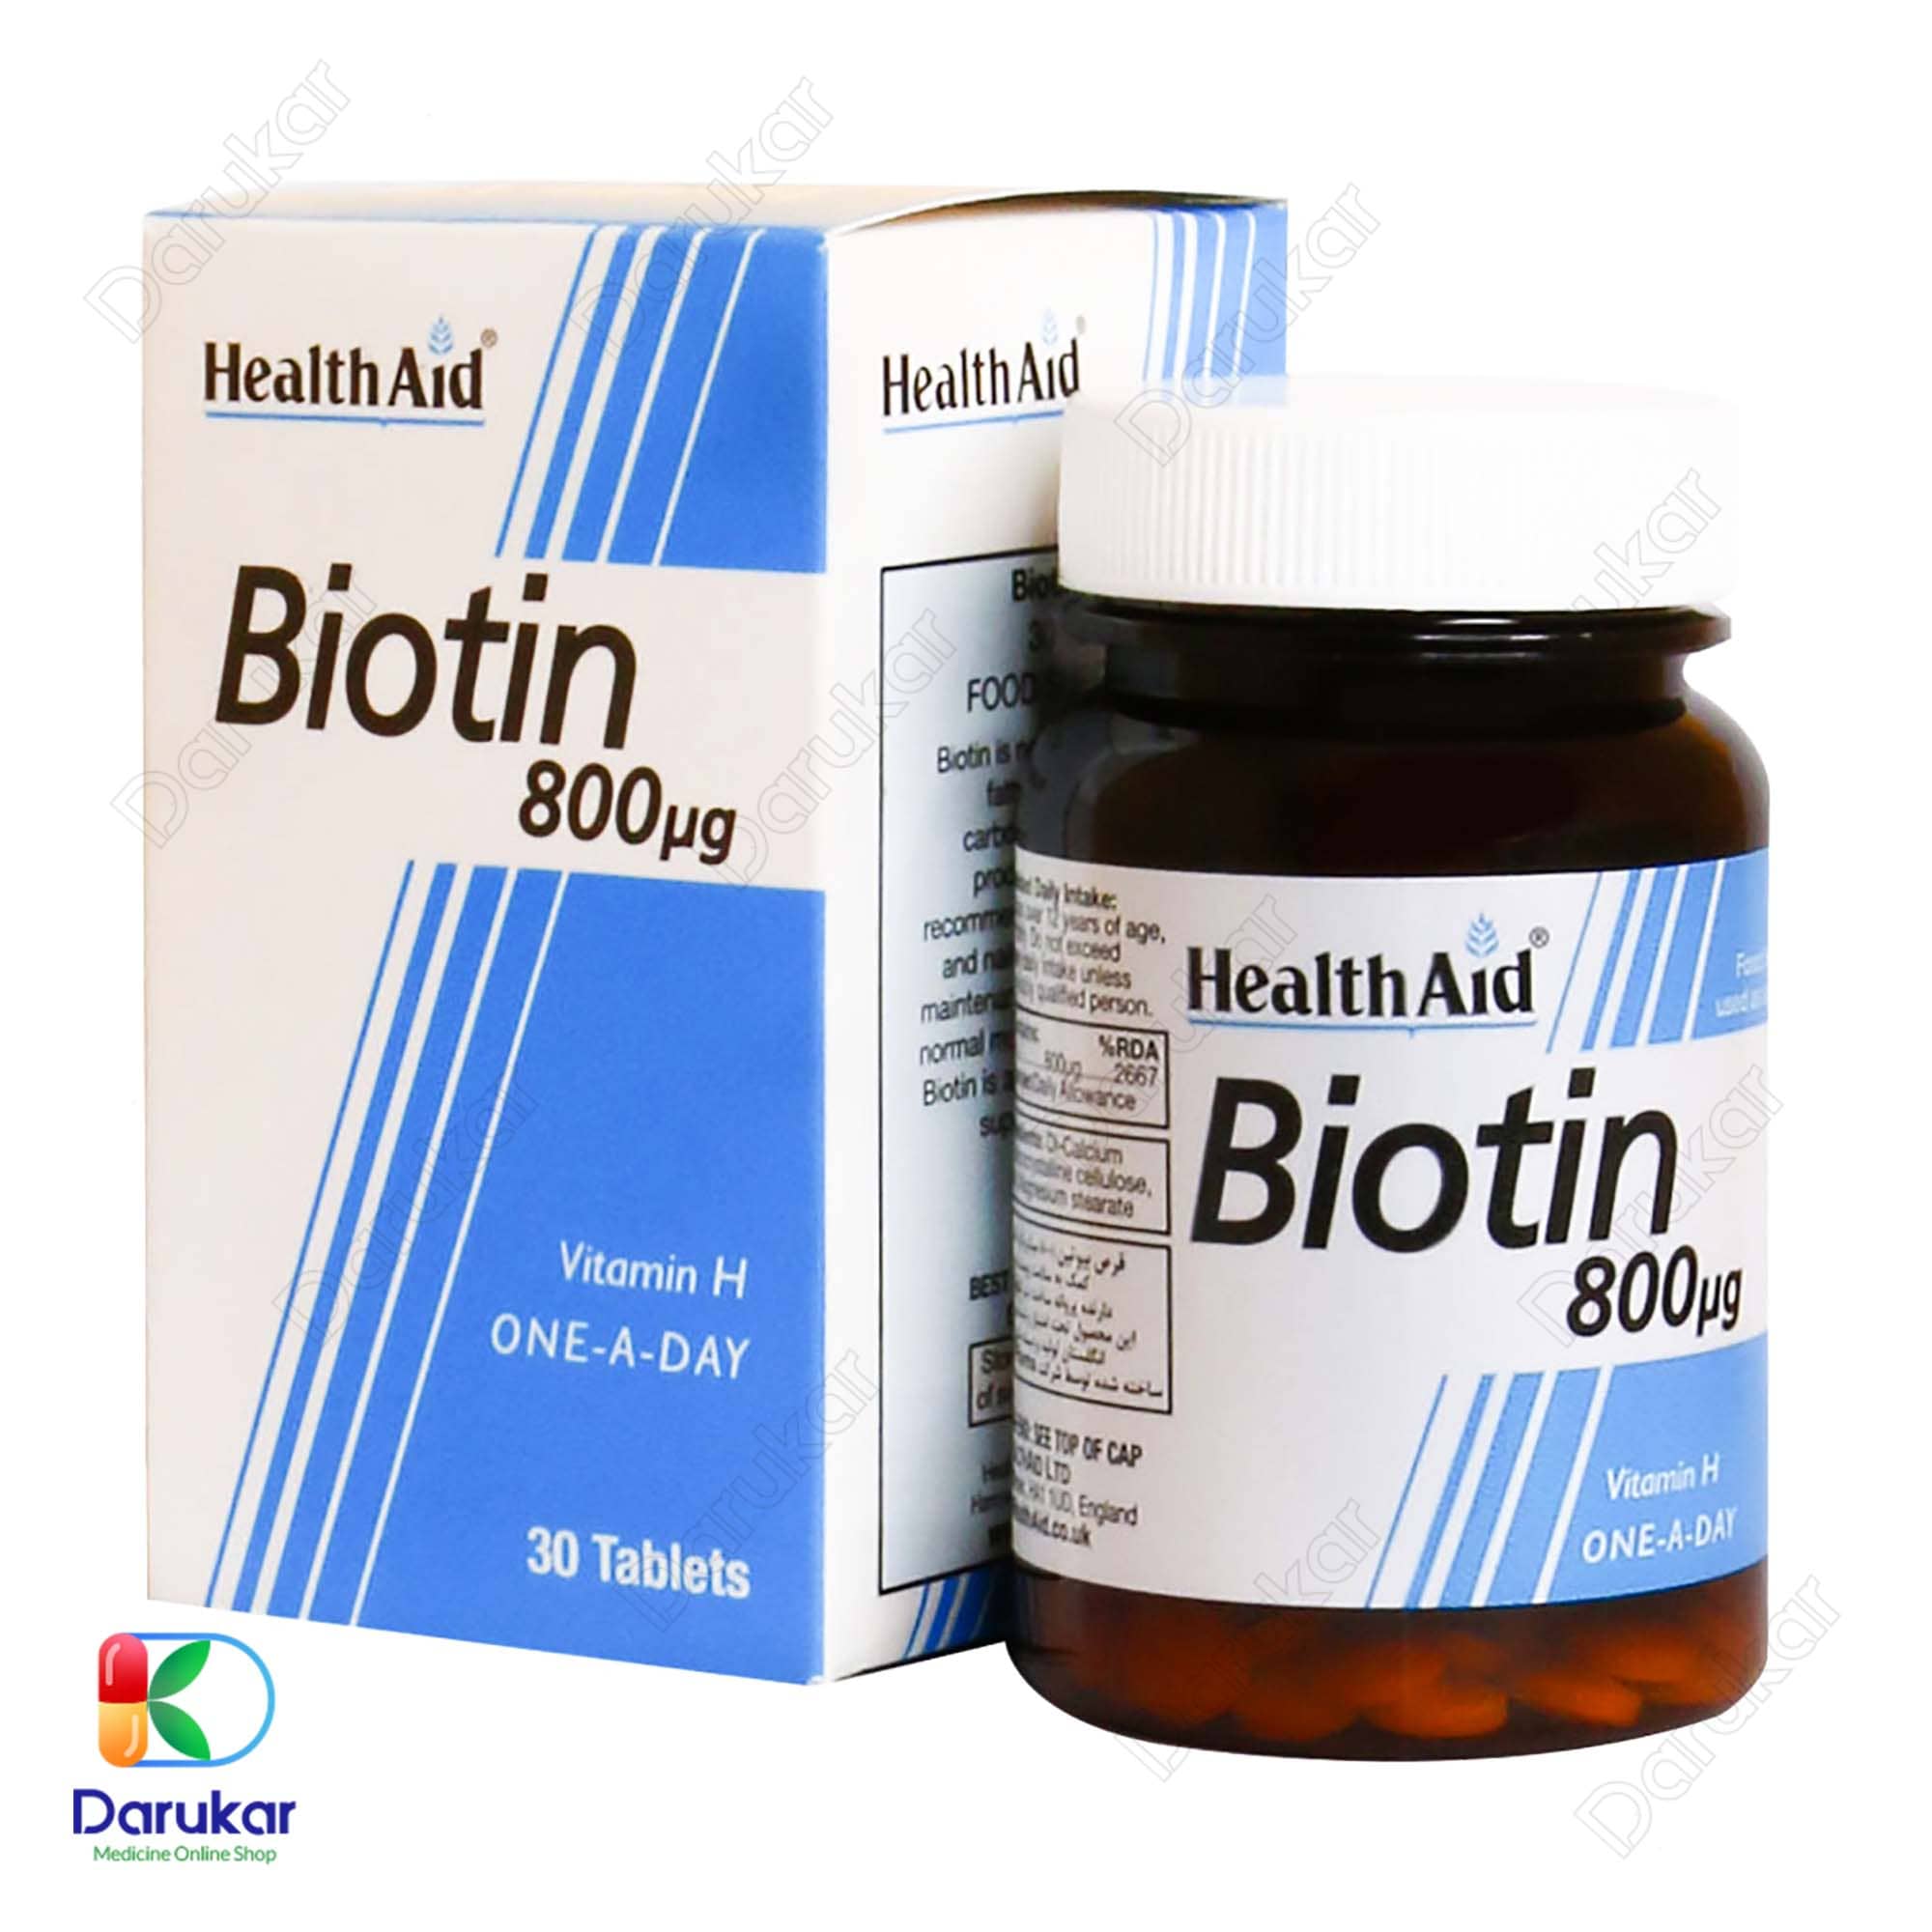 Health Aid Biotin 800 mcg 30 Tabs Image Gallery